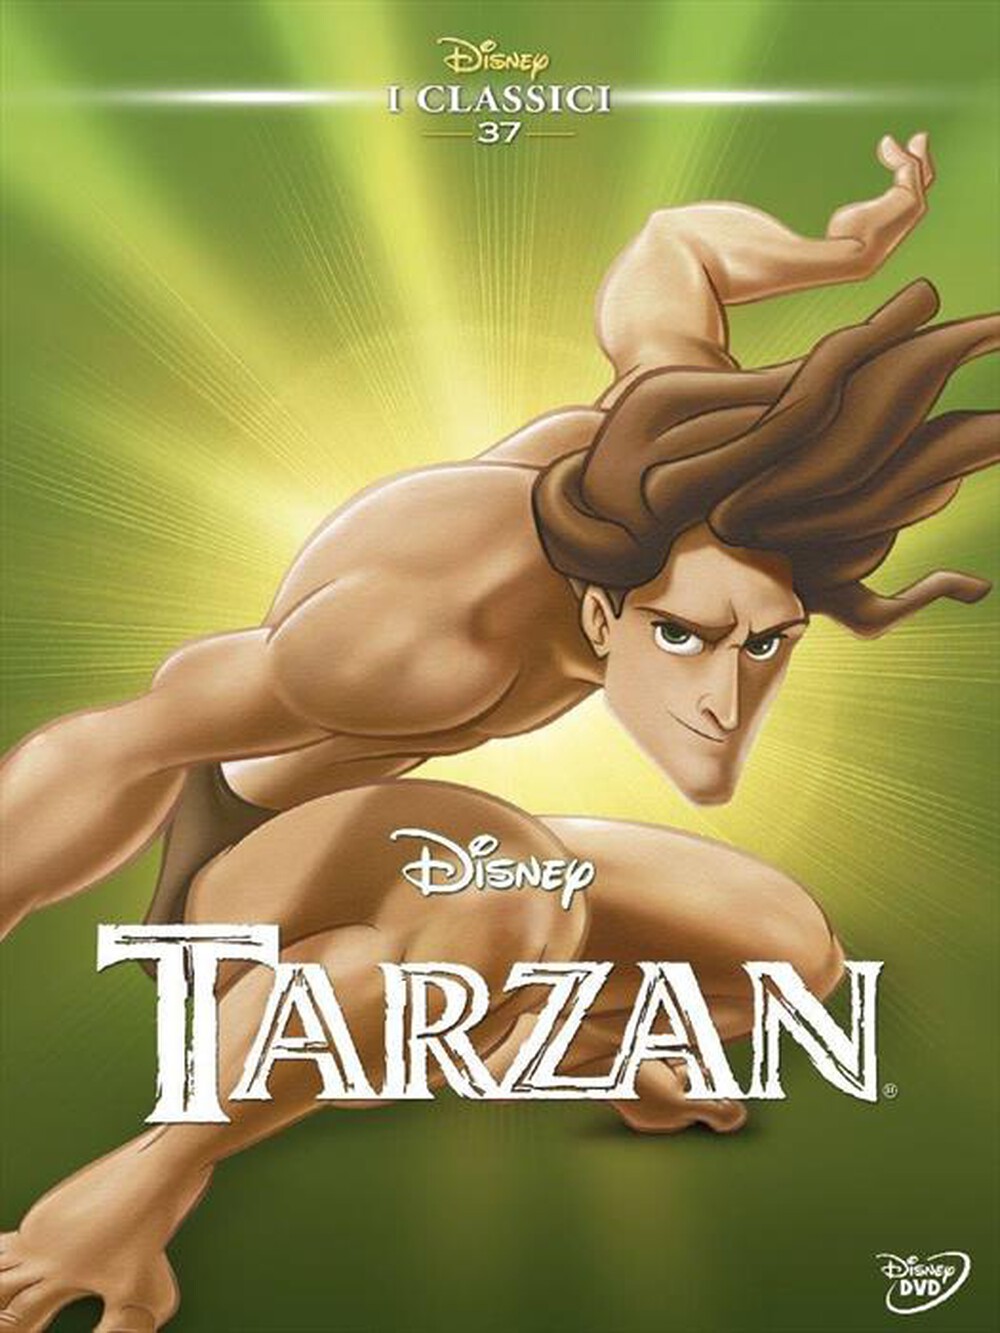 "WALT DISNEY - Tarzan - "